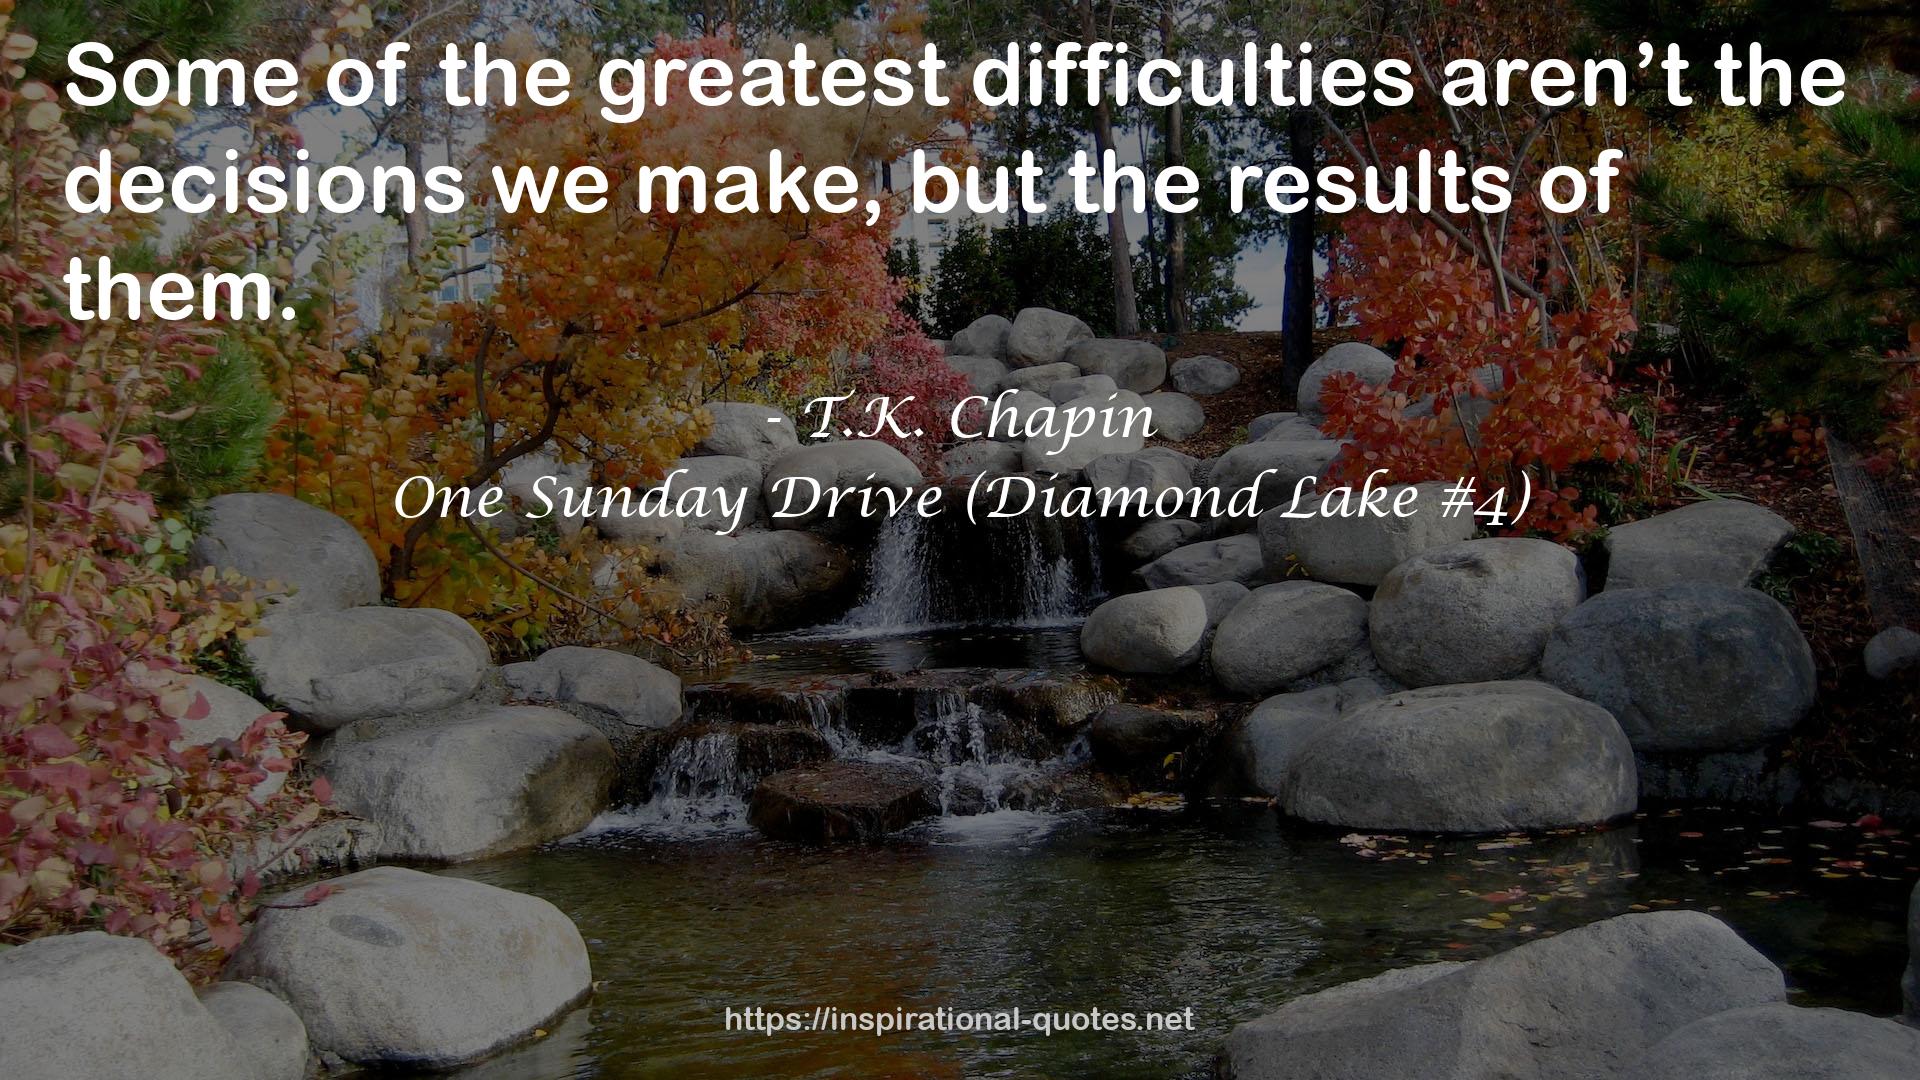 One Sunday Drive (Diamond Lake #4) QUOTES